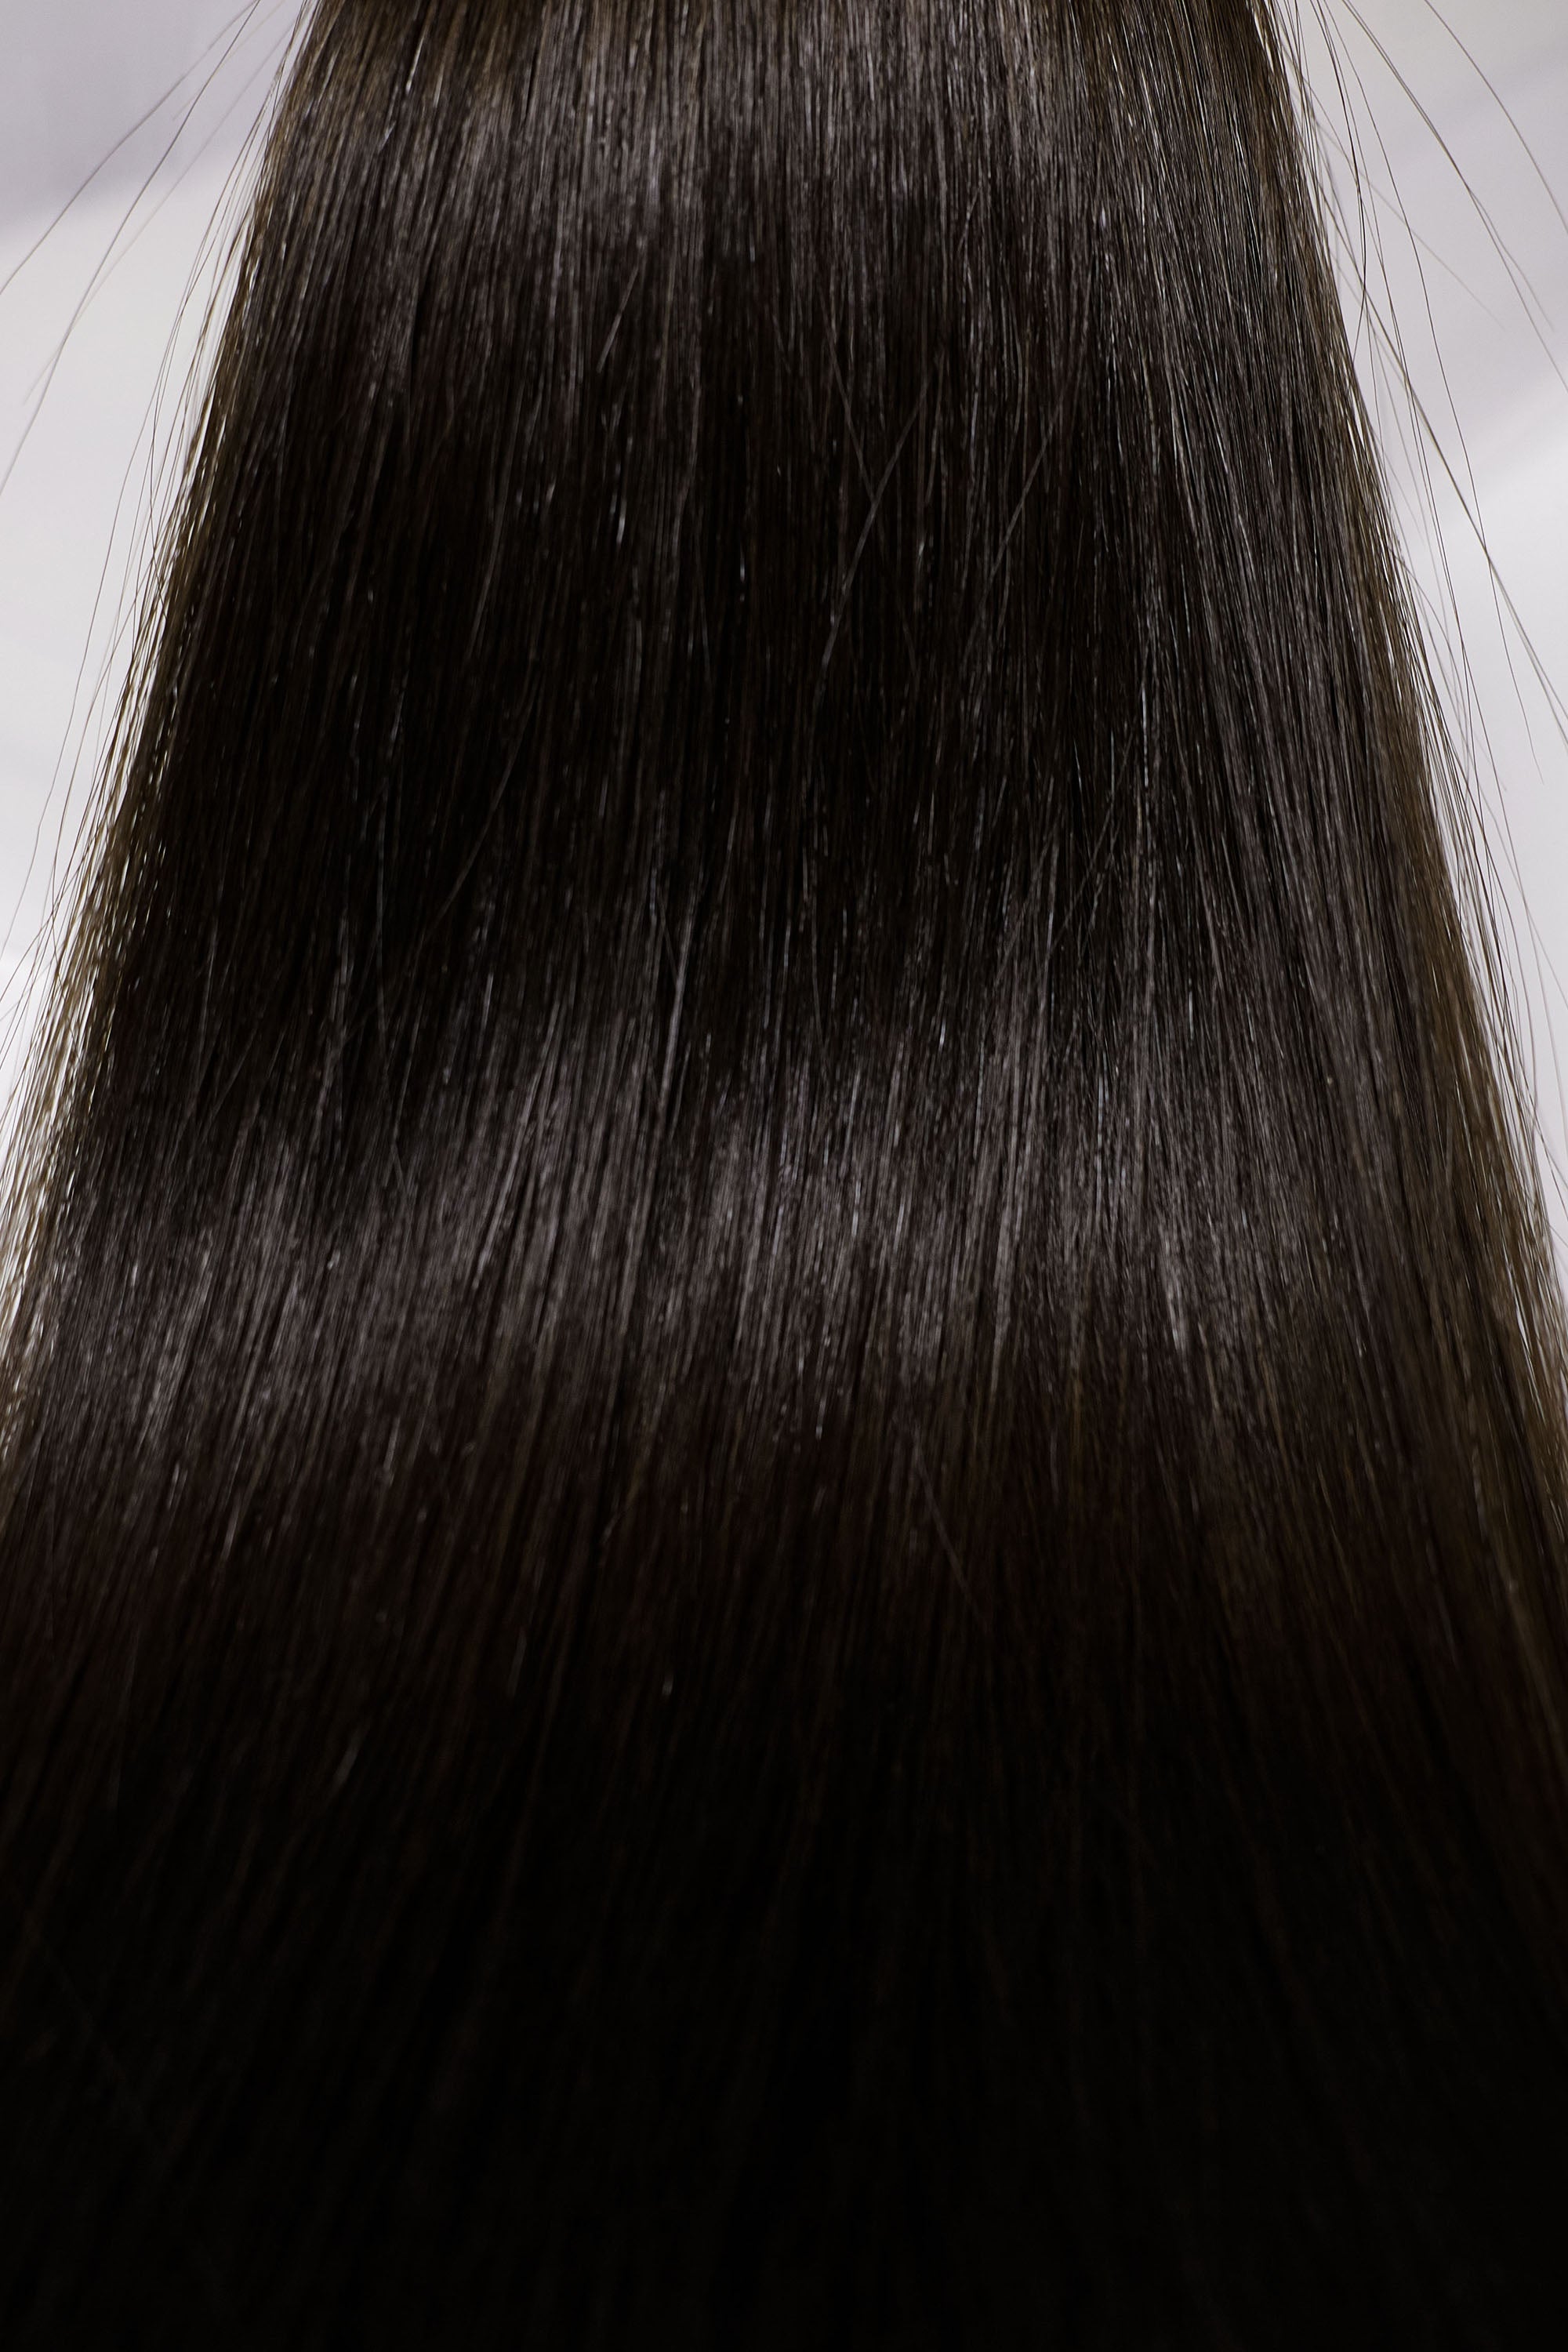 Behair professional Keratin Tip "Premium" 18" (45cm) Natural Straight Natural Black #1B- 25g (1g each pcs) hair extensions